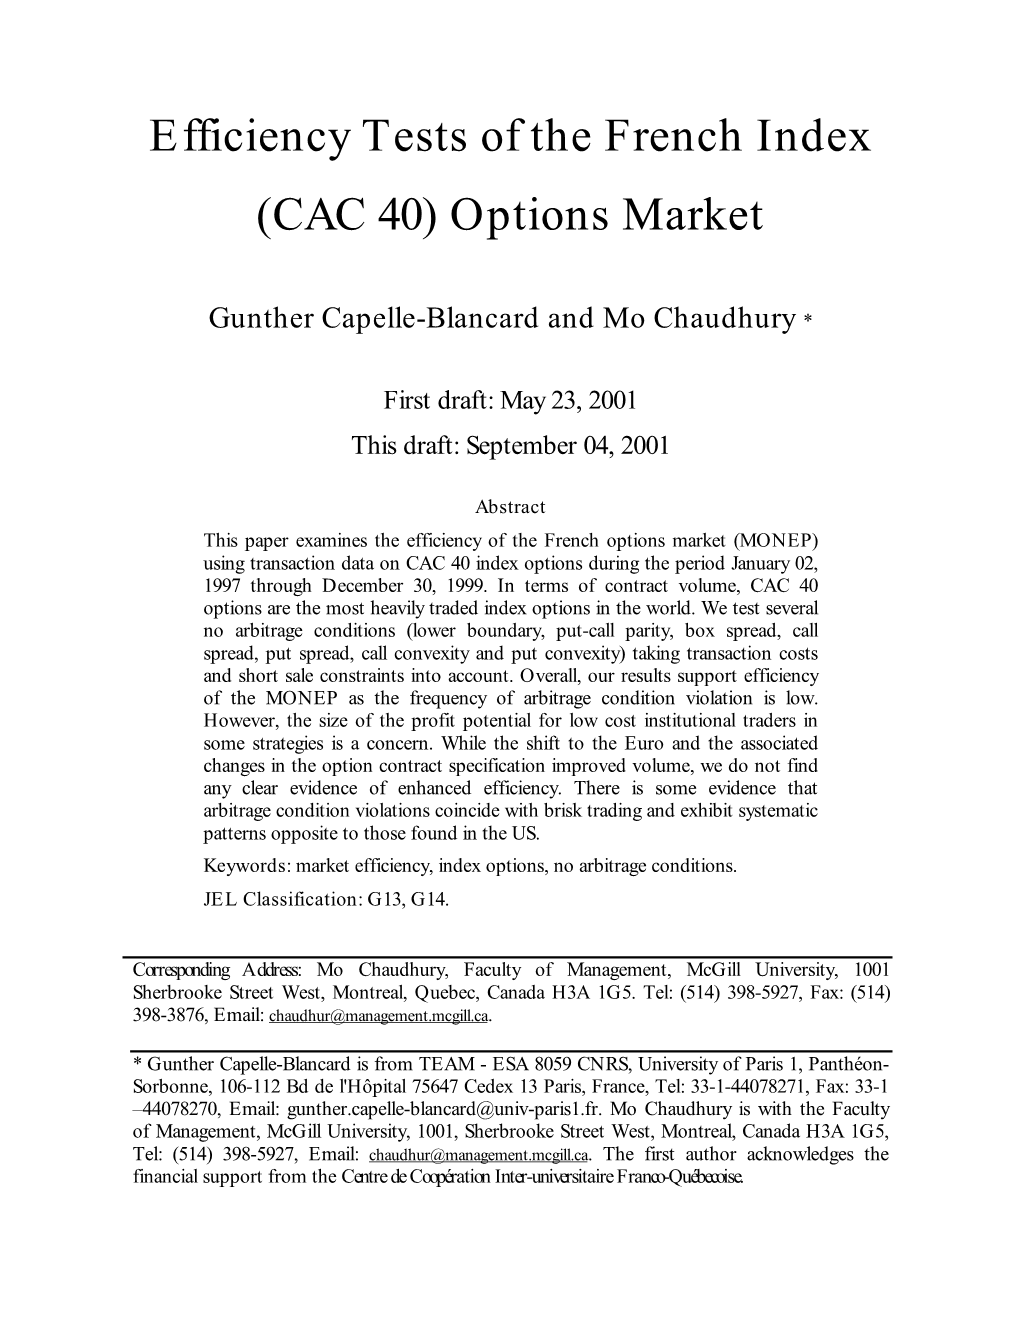 CAC 40) Options Market